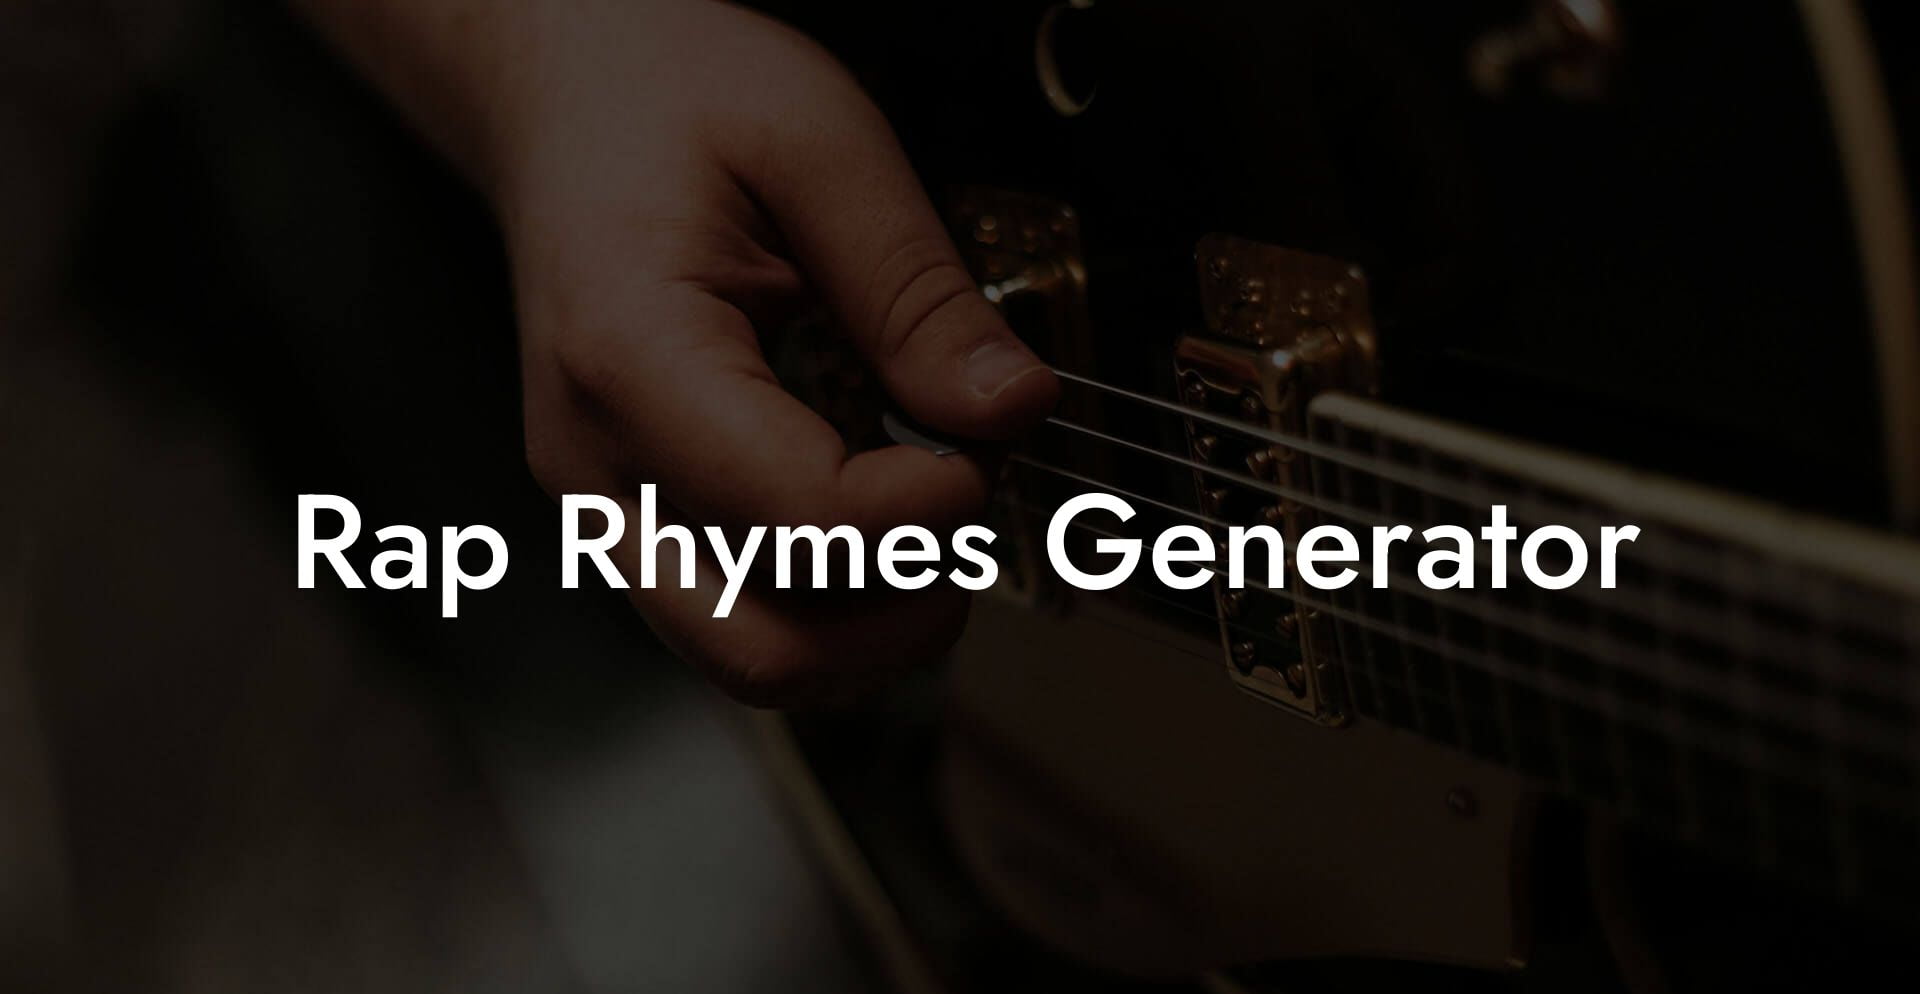 rap rhymes generator lyric assistant